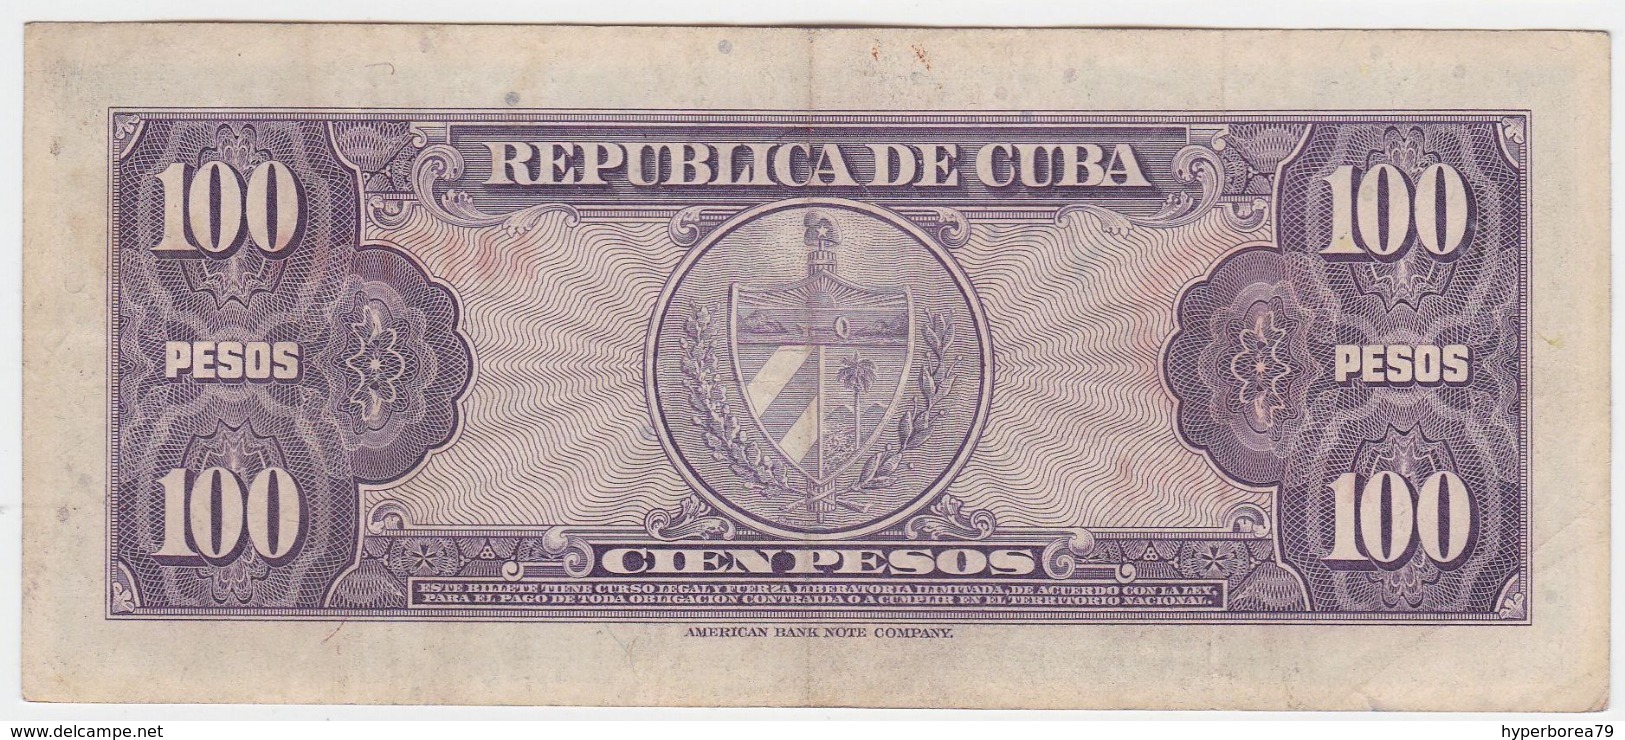 Cuba P 82 A - 100 Pesos 1950 - Fine - Cuba